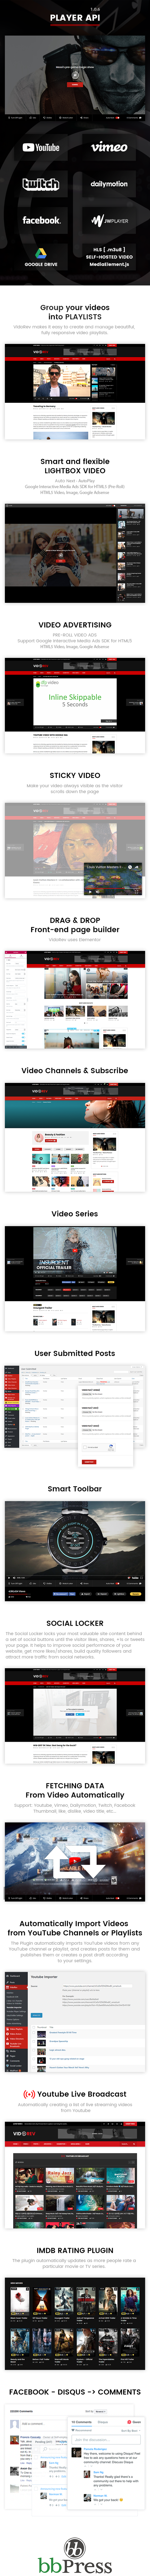 VidoRev - Video WordPress Layout